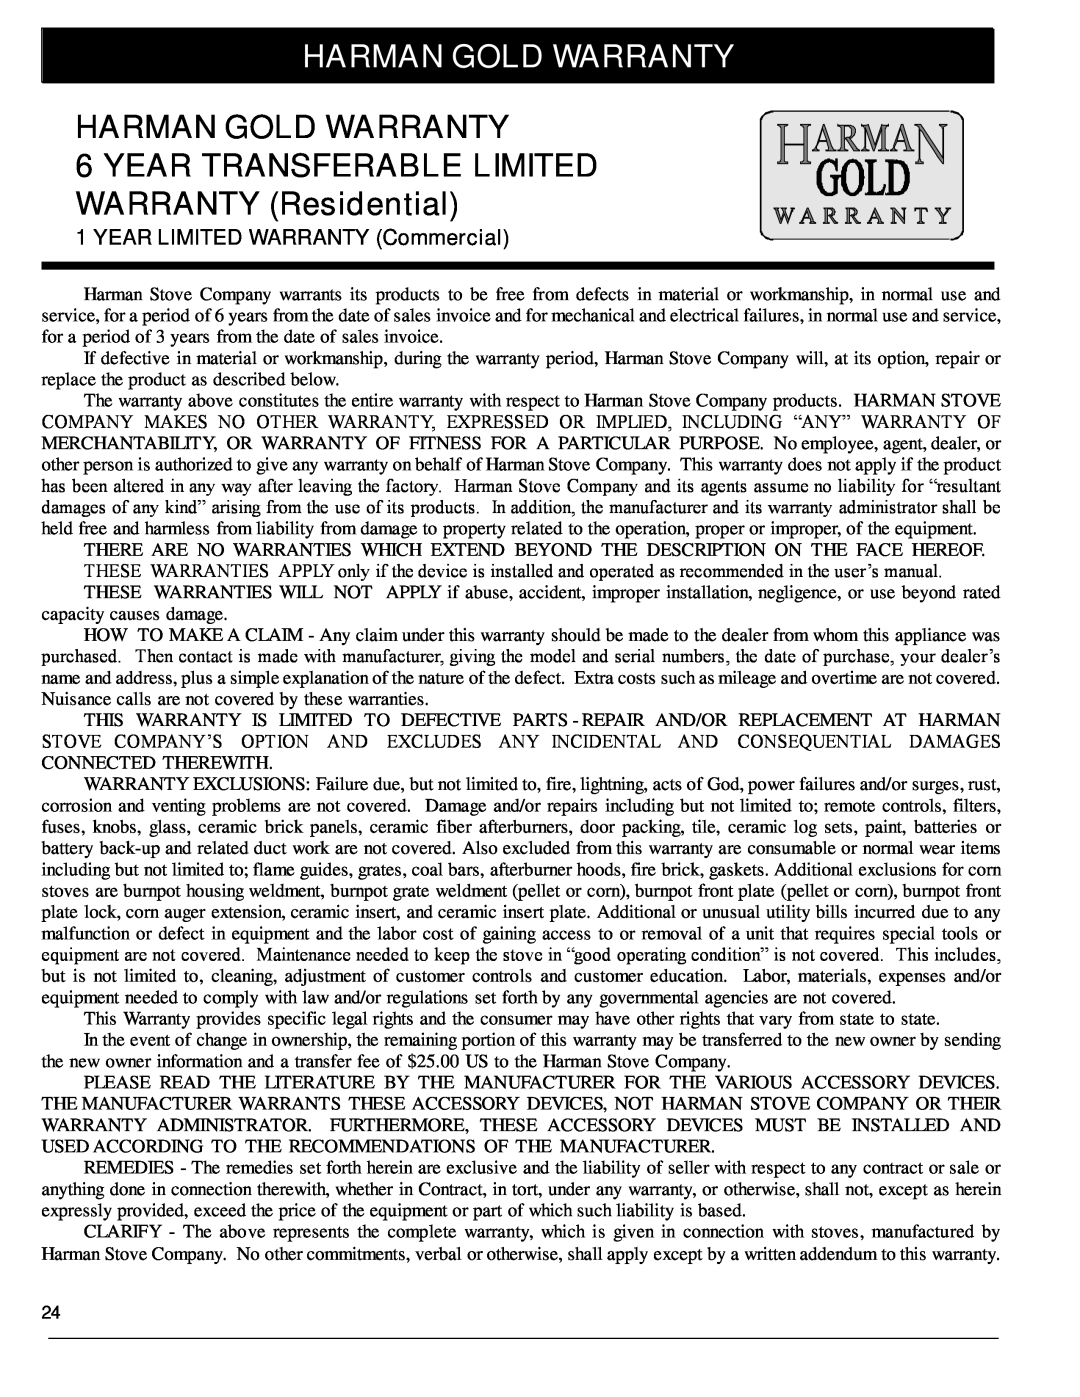 Harman Stove Company 929 DV Harman Gold Warranty, HARMAN GOLD WARRANTY 6 YEAR TRANSFERABLE LIMITED WARRANTY Residential 